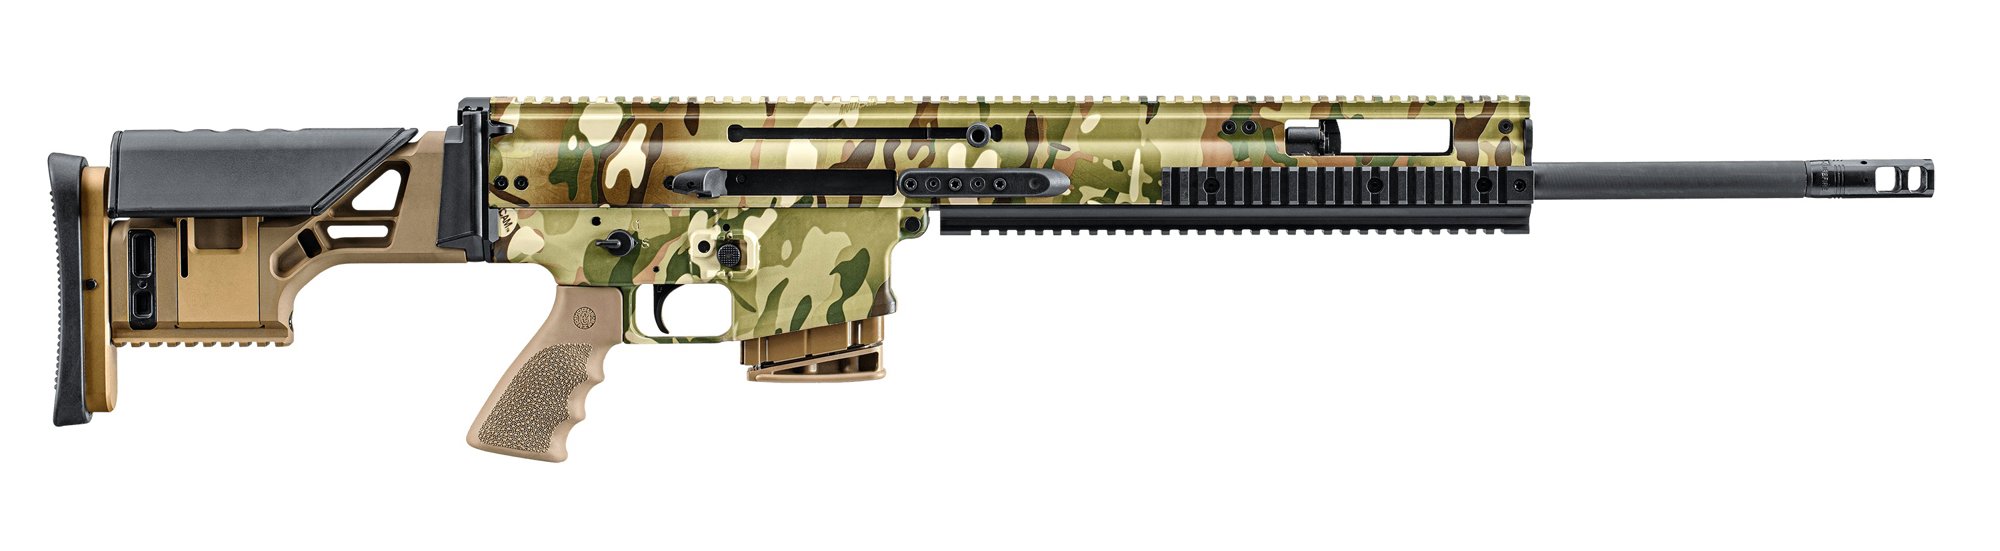 FN AMERICA SCAR 20S NRCH 7.62x51 NATO 20